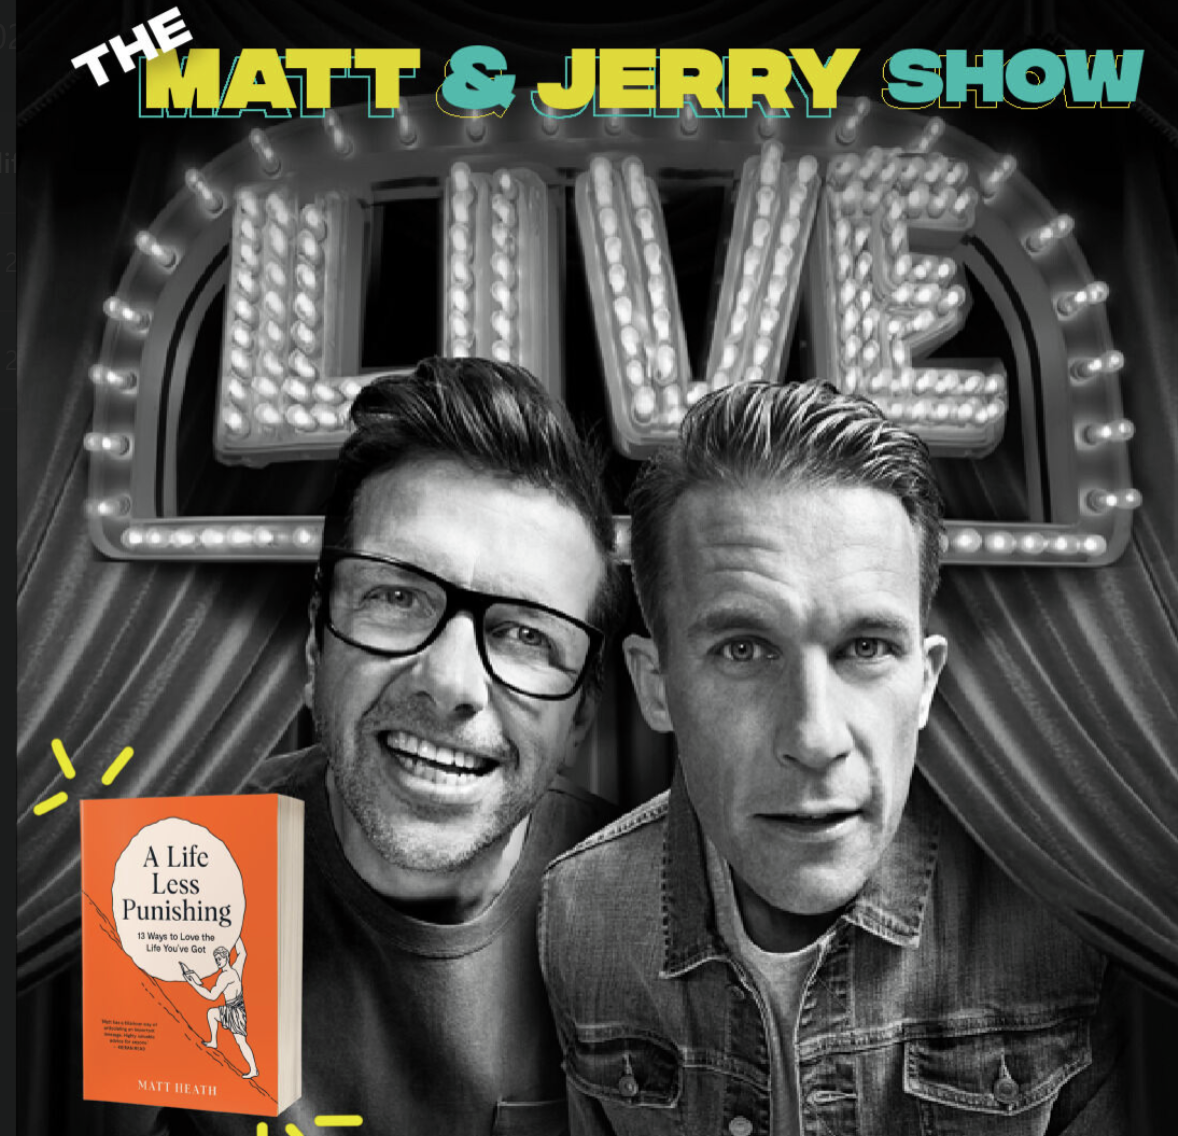 Live Podcast & Book Launch - The Matt & Jerry Show Live